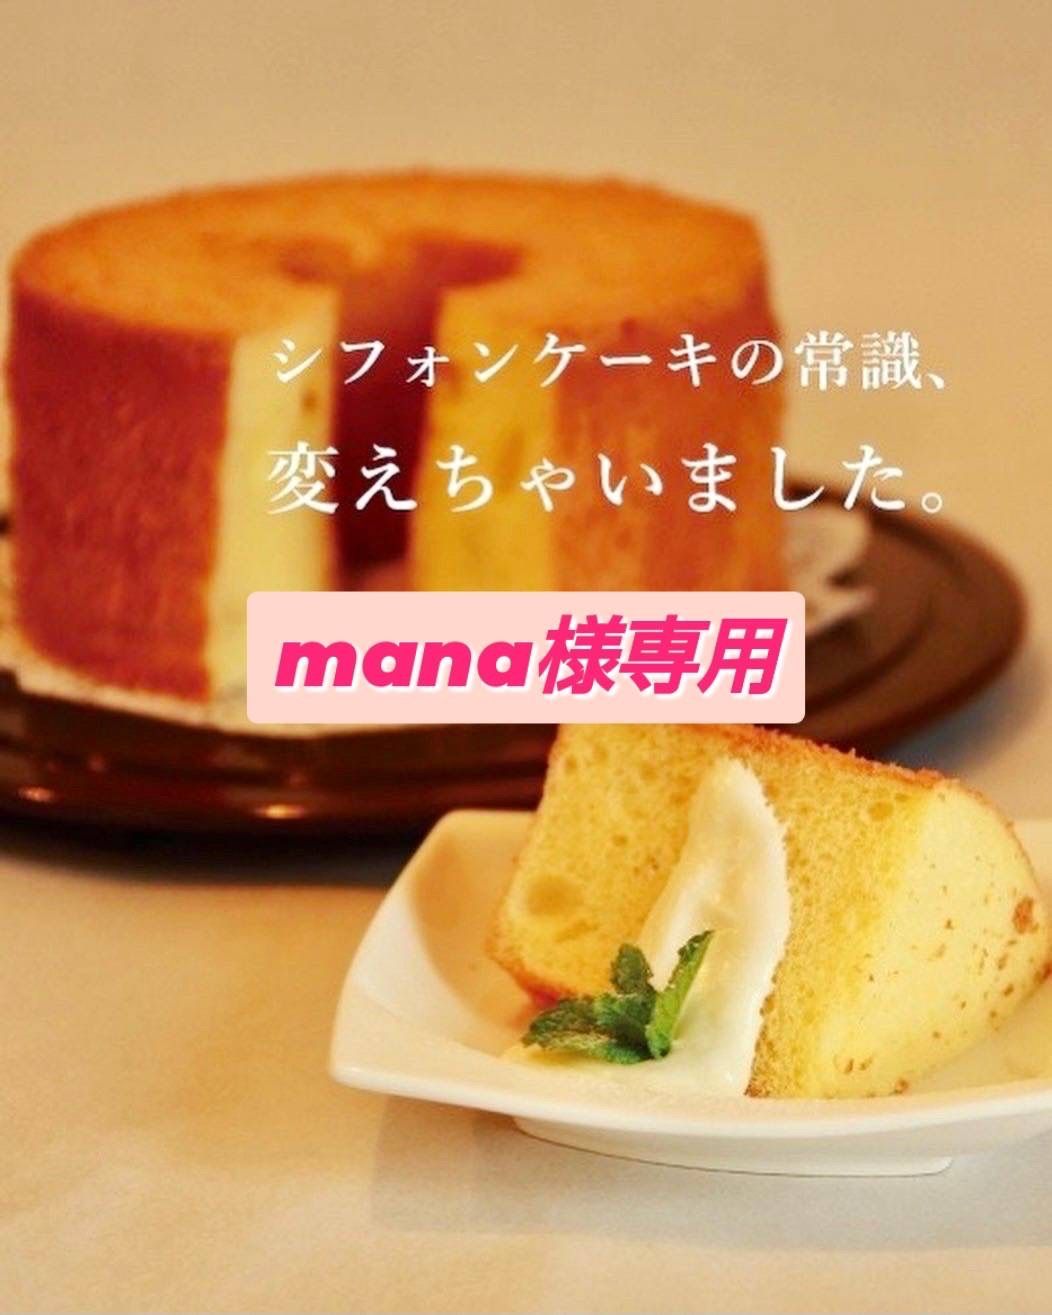 mana様専用〜綿雪〜カットシフォンケーキ10個セット